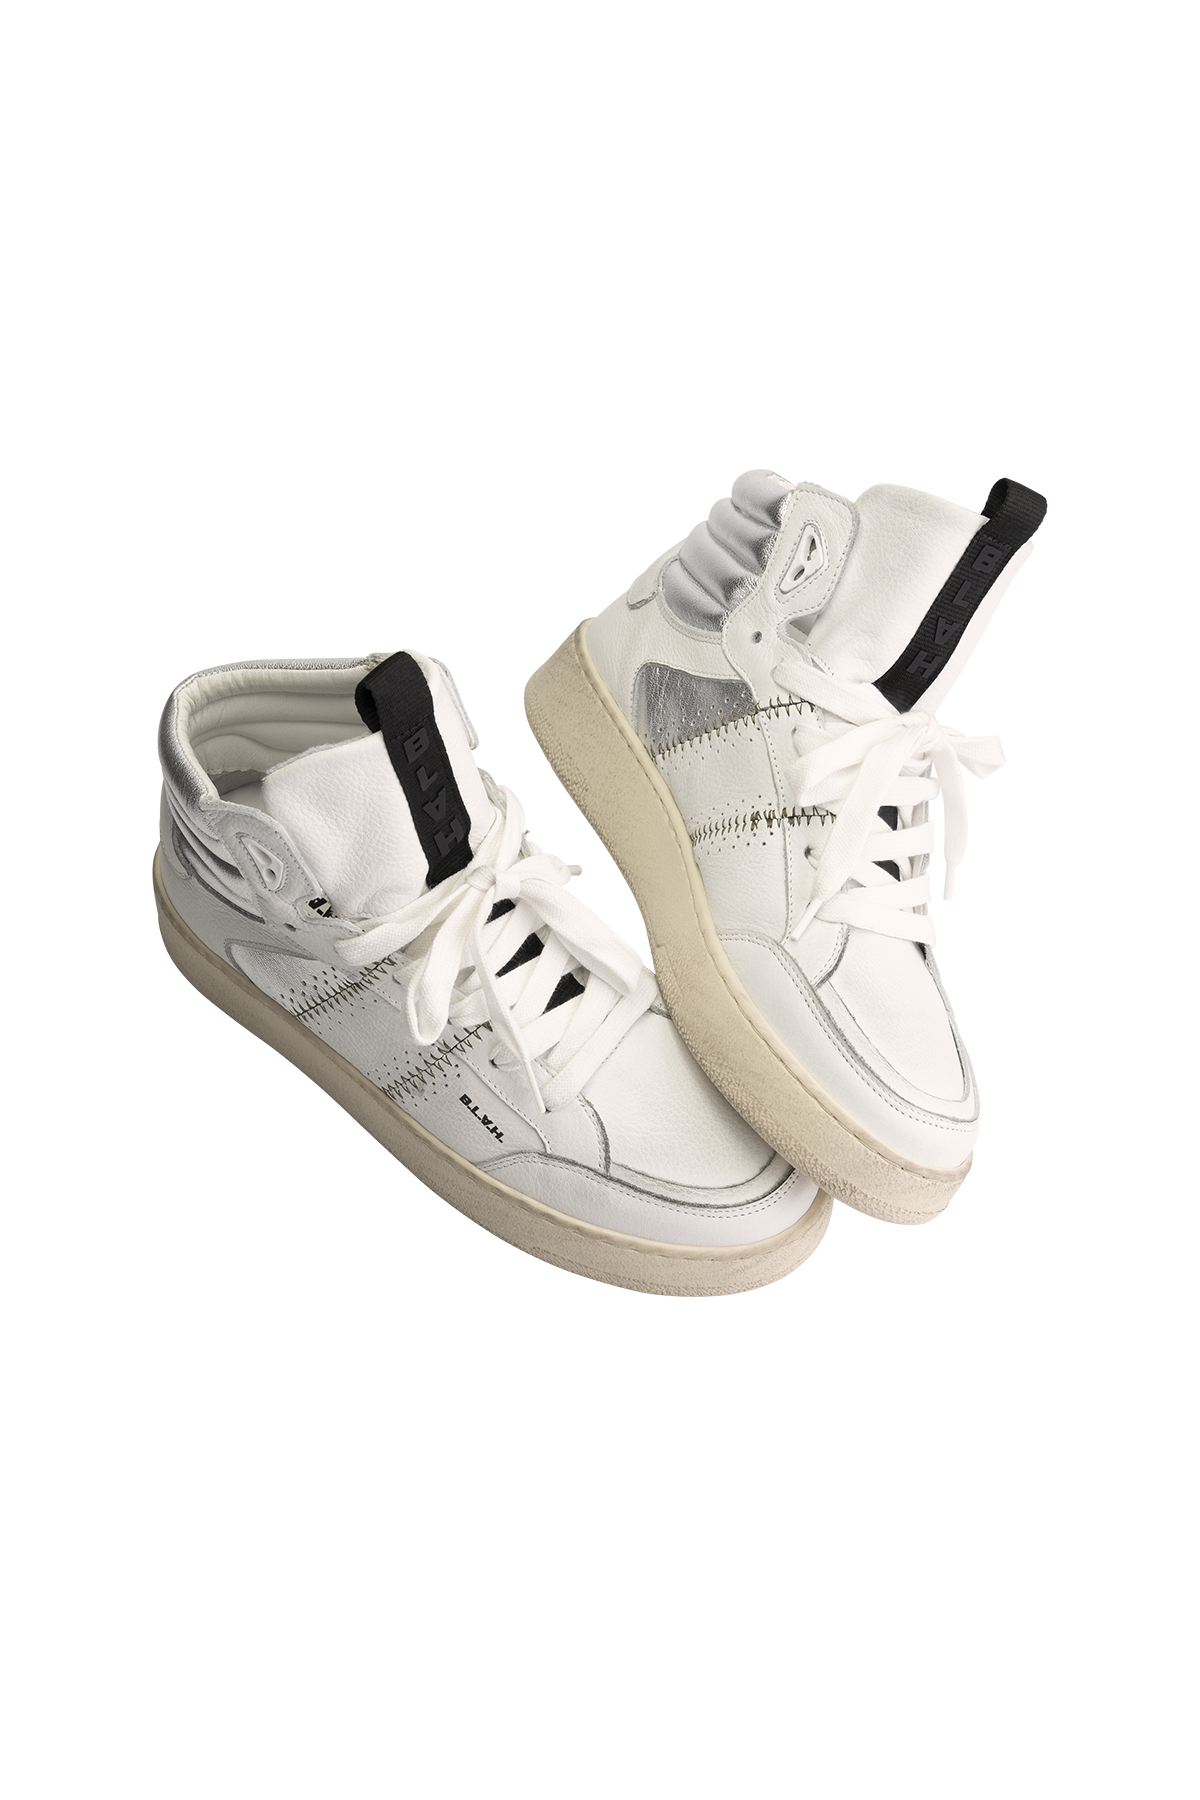 BLAH Jenn Sneaker - White / Silver - RUM Amsterdam